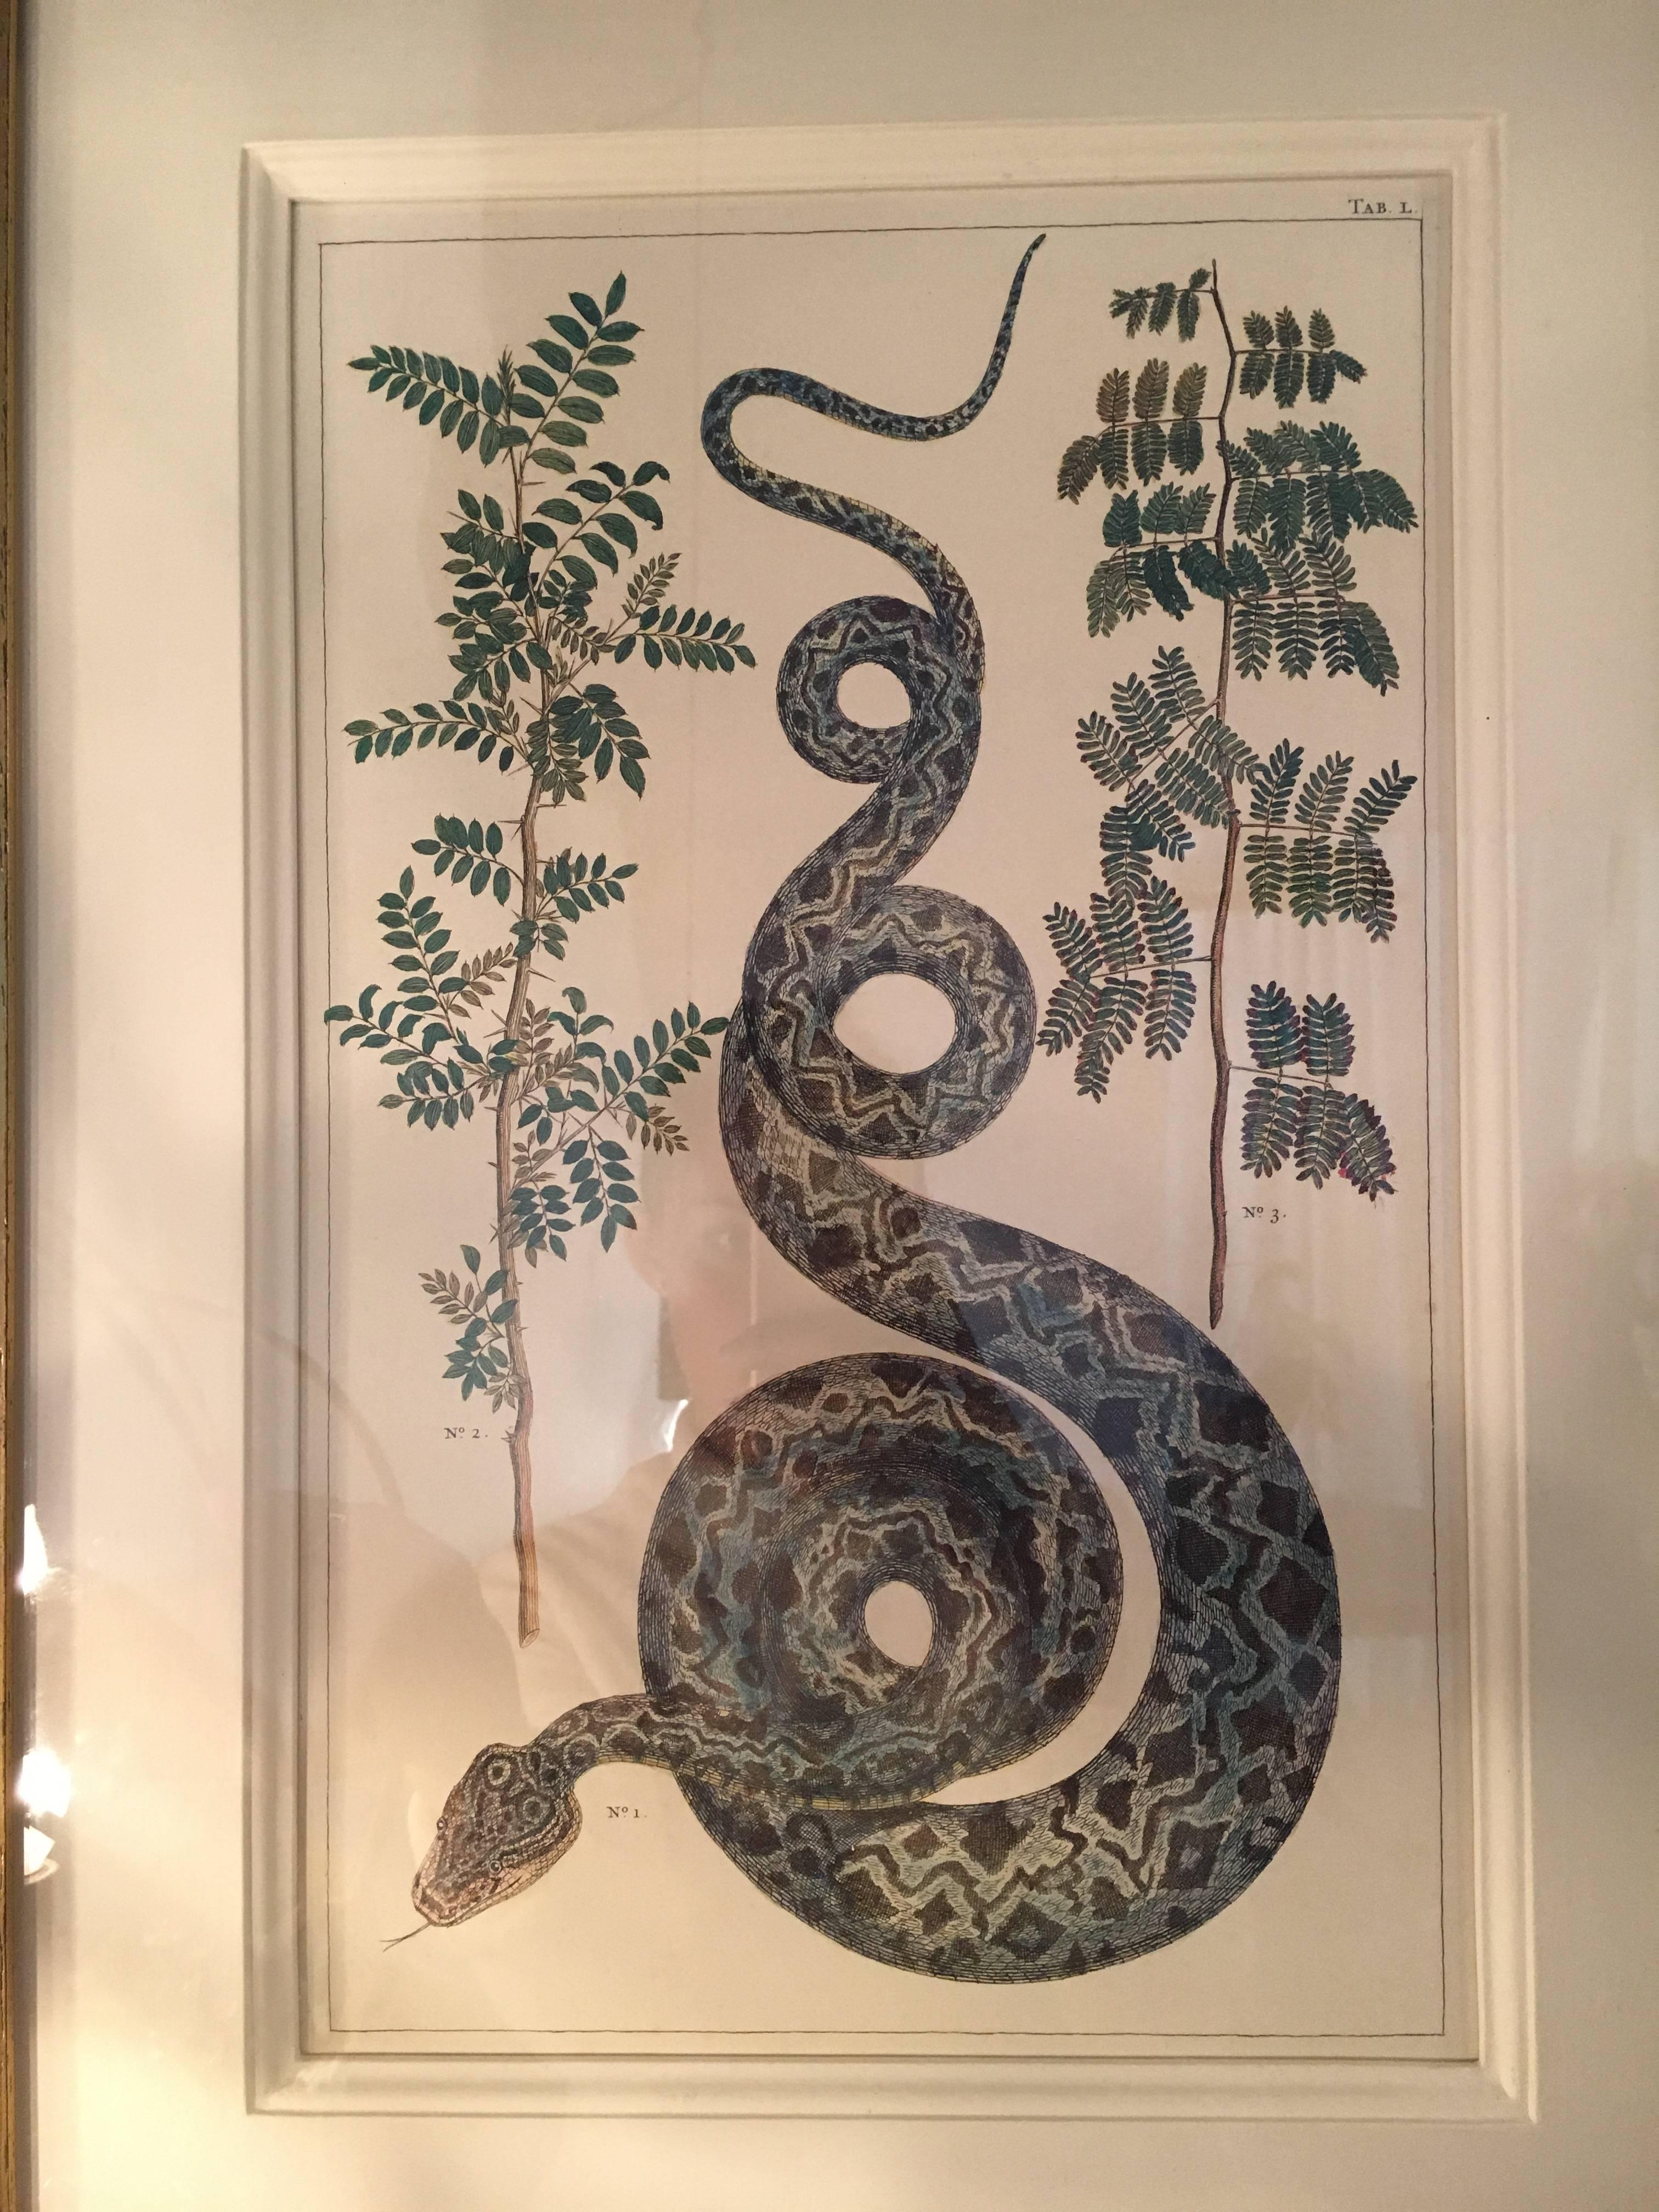 Matted and framed snake print.